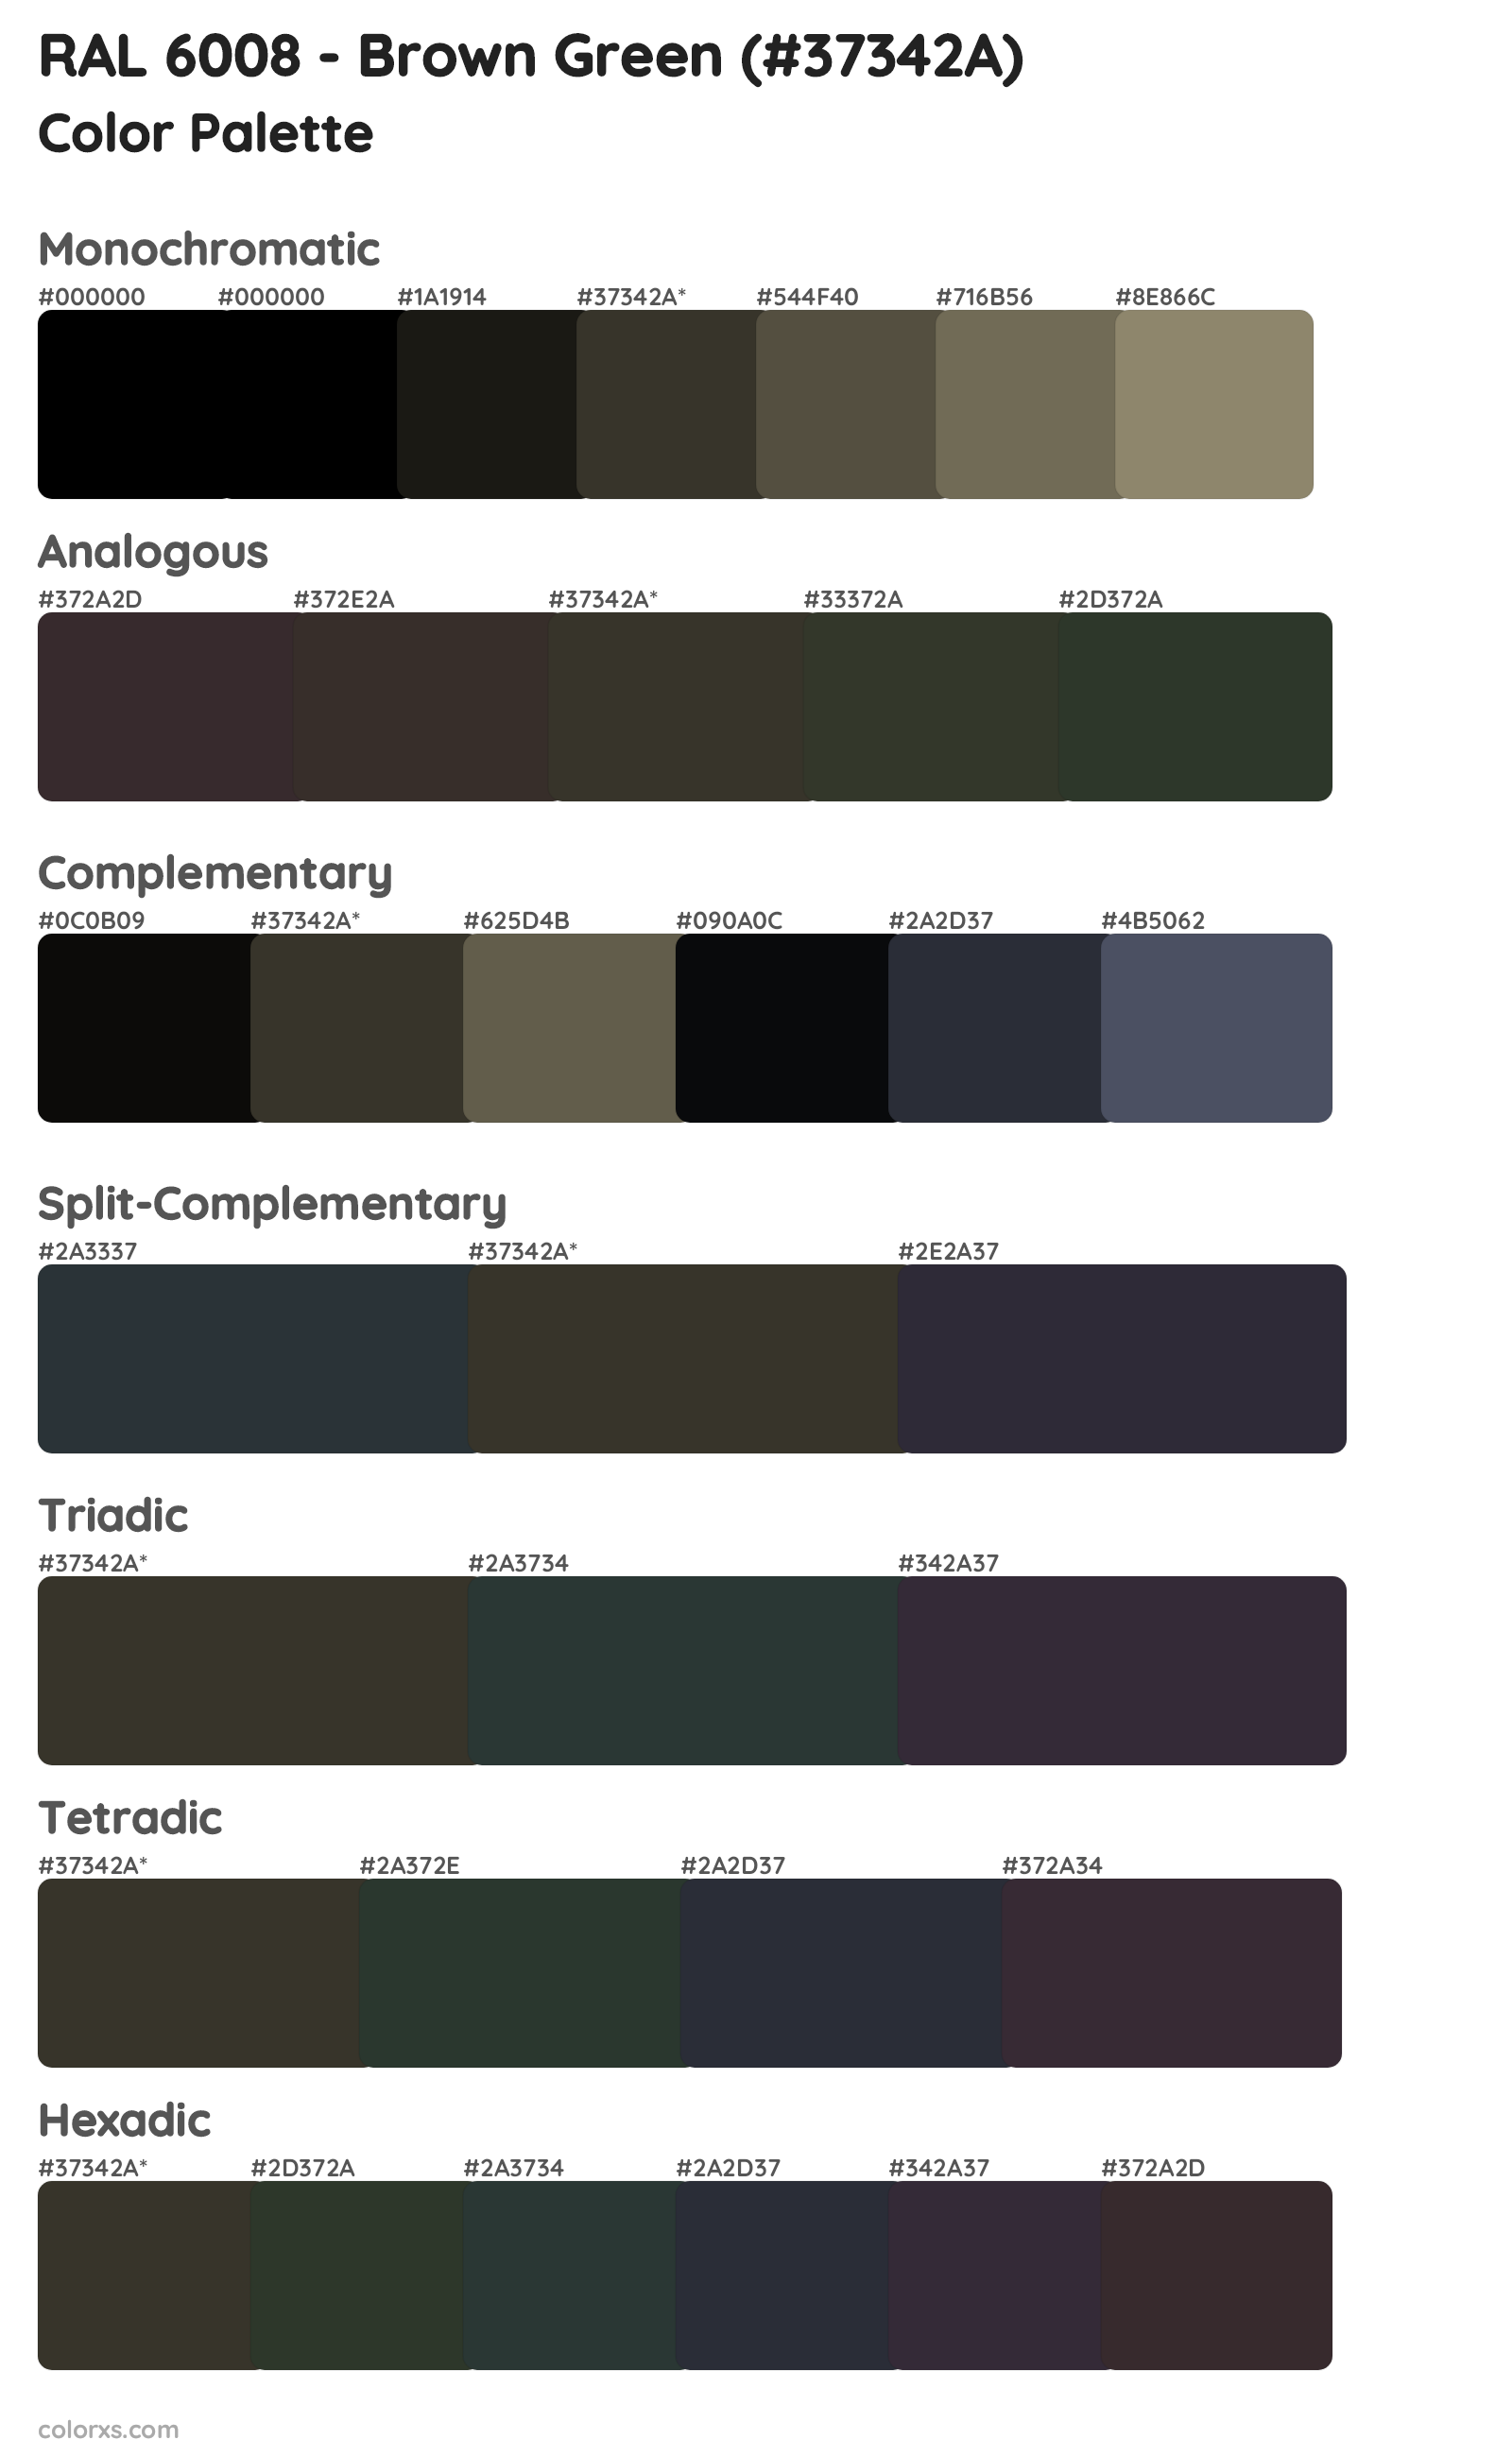 RAL 6008 - Brown Green Color Scheme Palettes